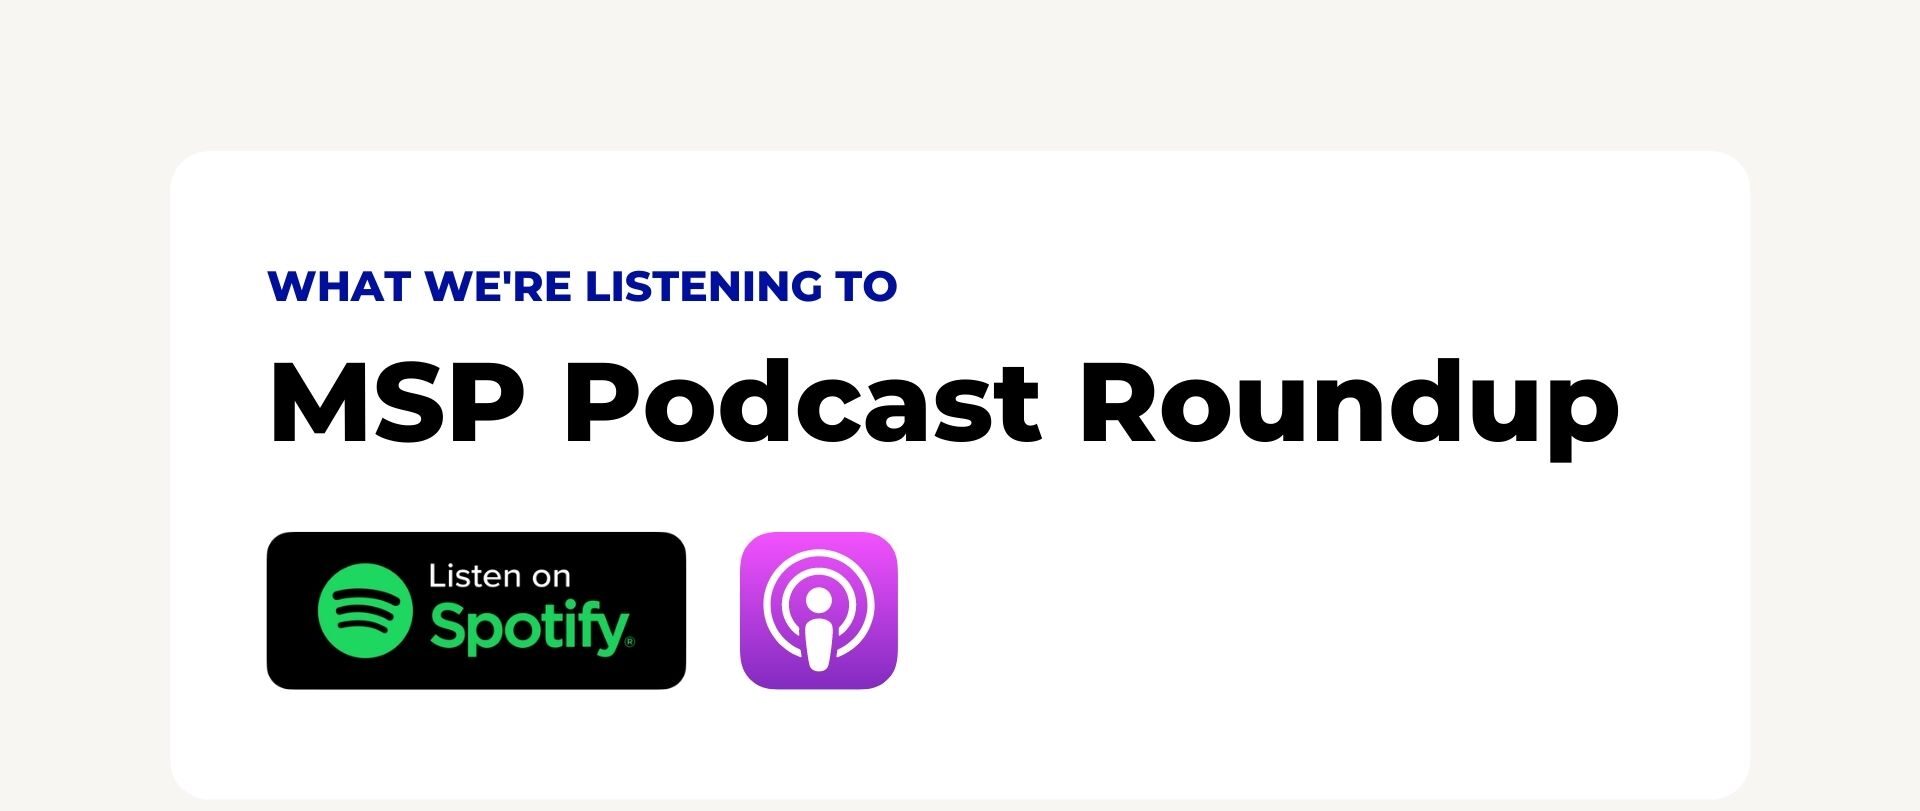 msp podcast roundup